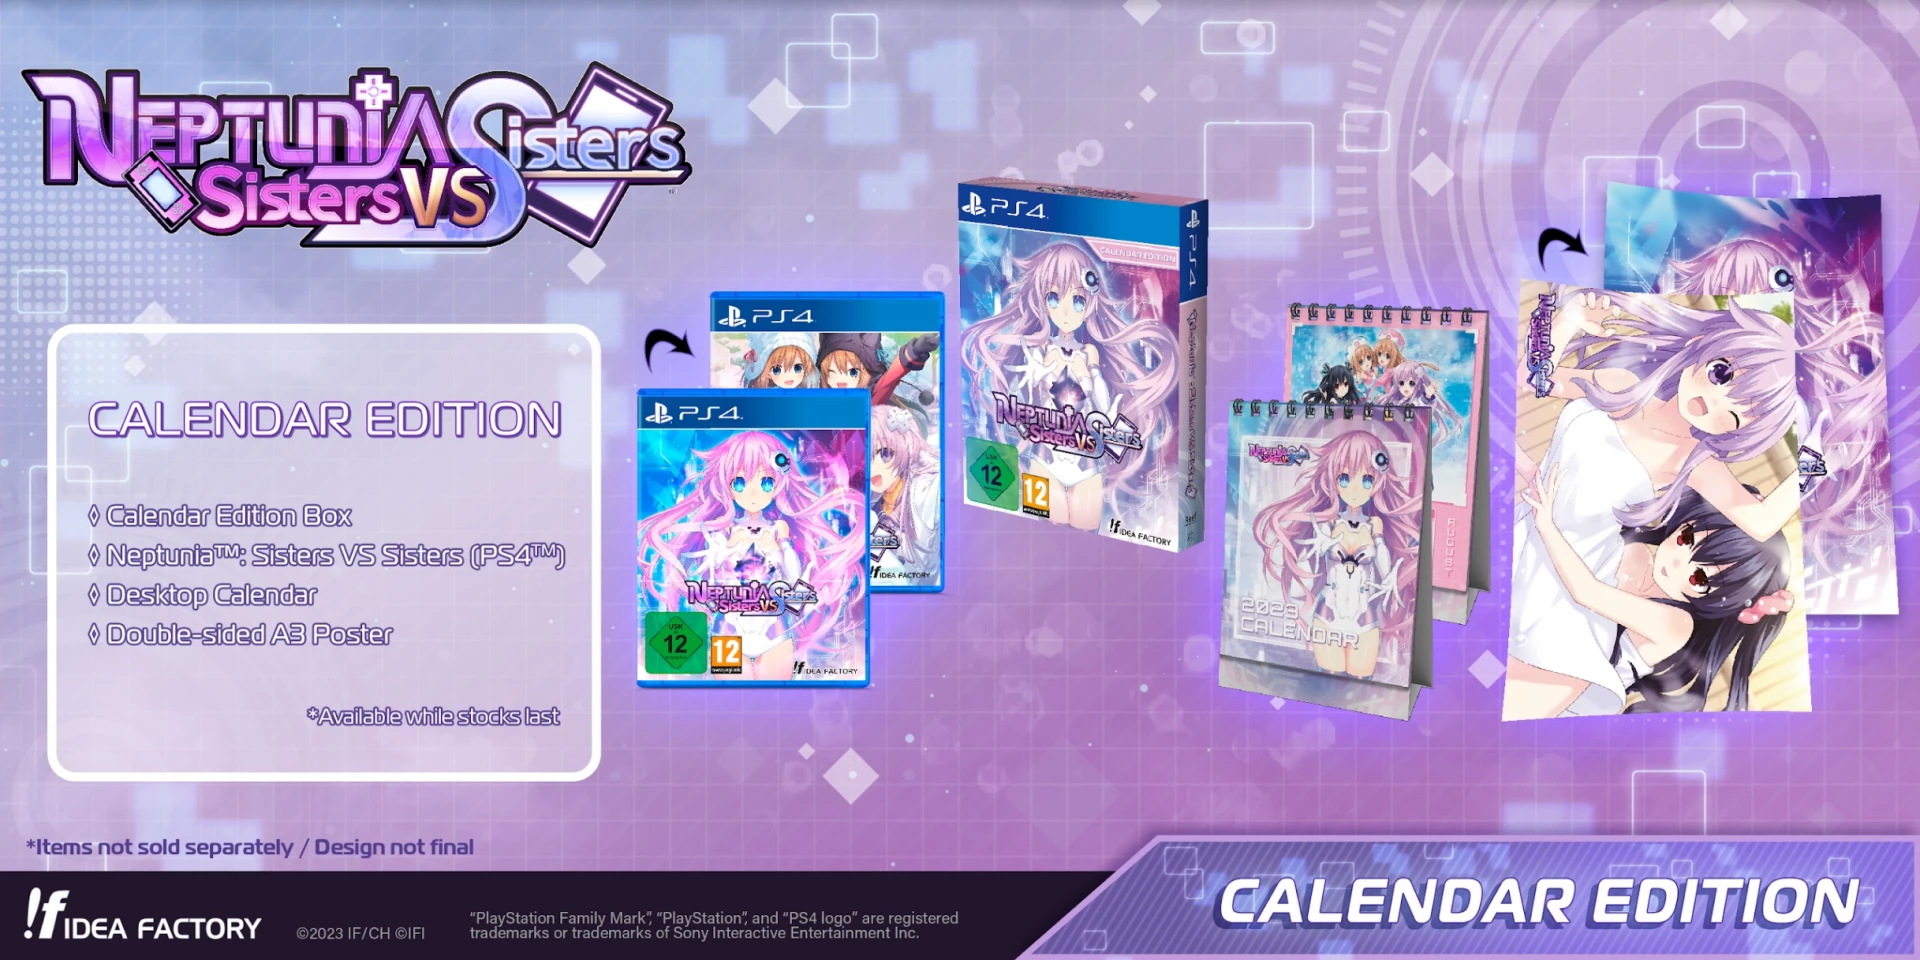 Neptunia: Sisters VS Sisters - Calendar Edition (PS4), Idea Factory